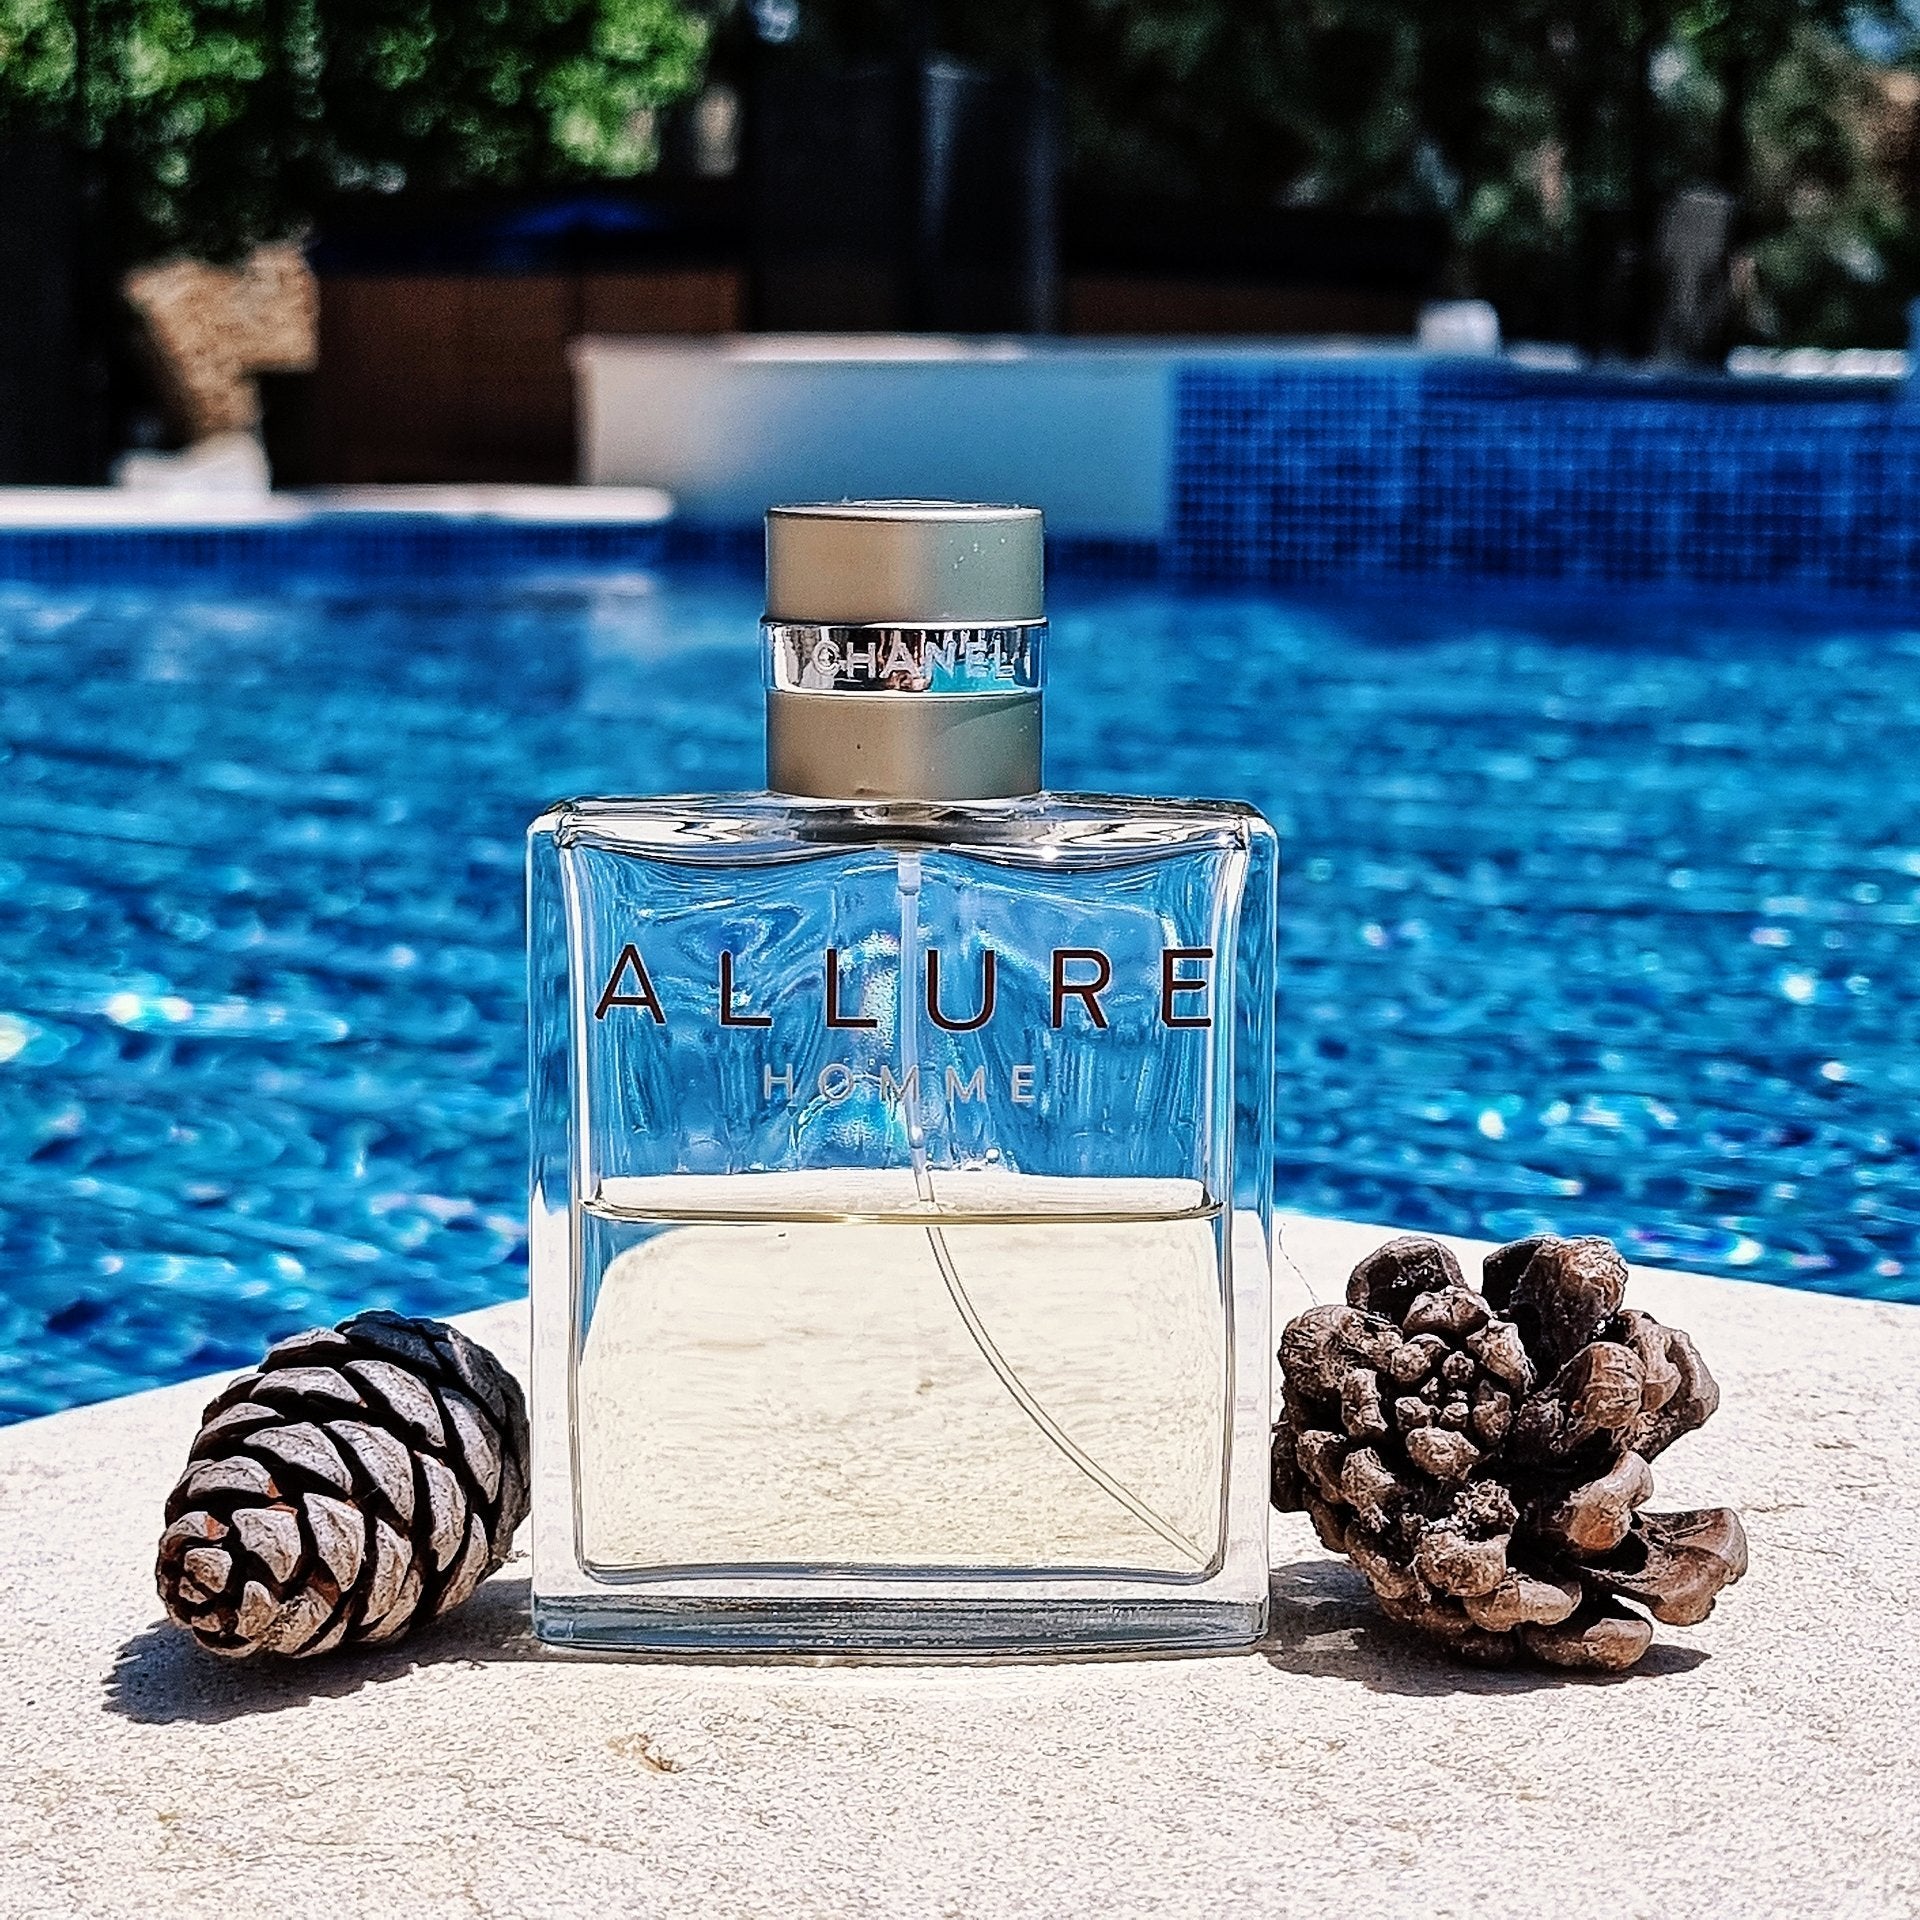 Chanel Allure Homme EDT - My Perfume Shop Australia